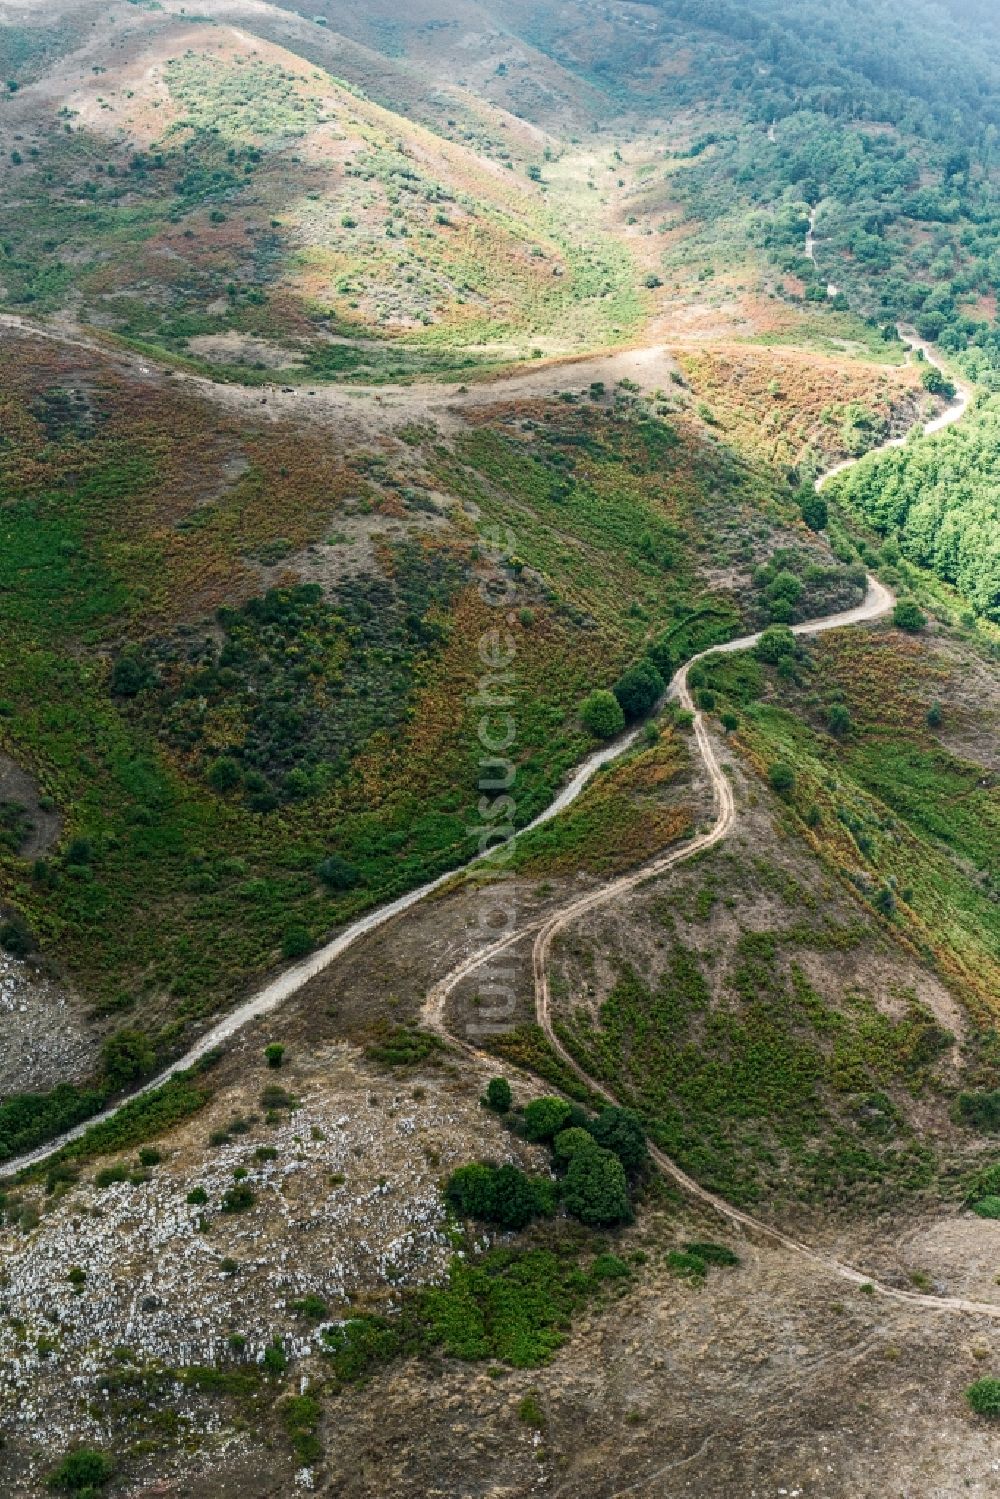 Luftaufnahme Sizilien - Heidelandschaft im Gebirgszug des Nebrodi National Park in Sizilien in Italien